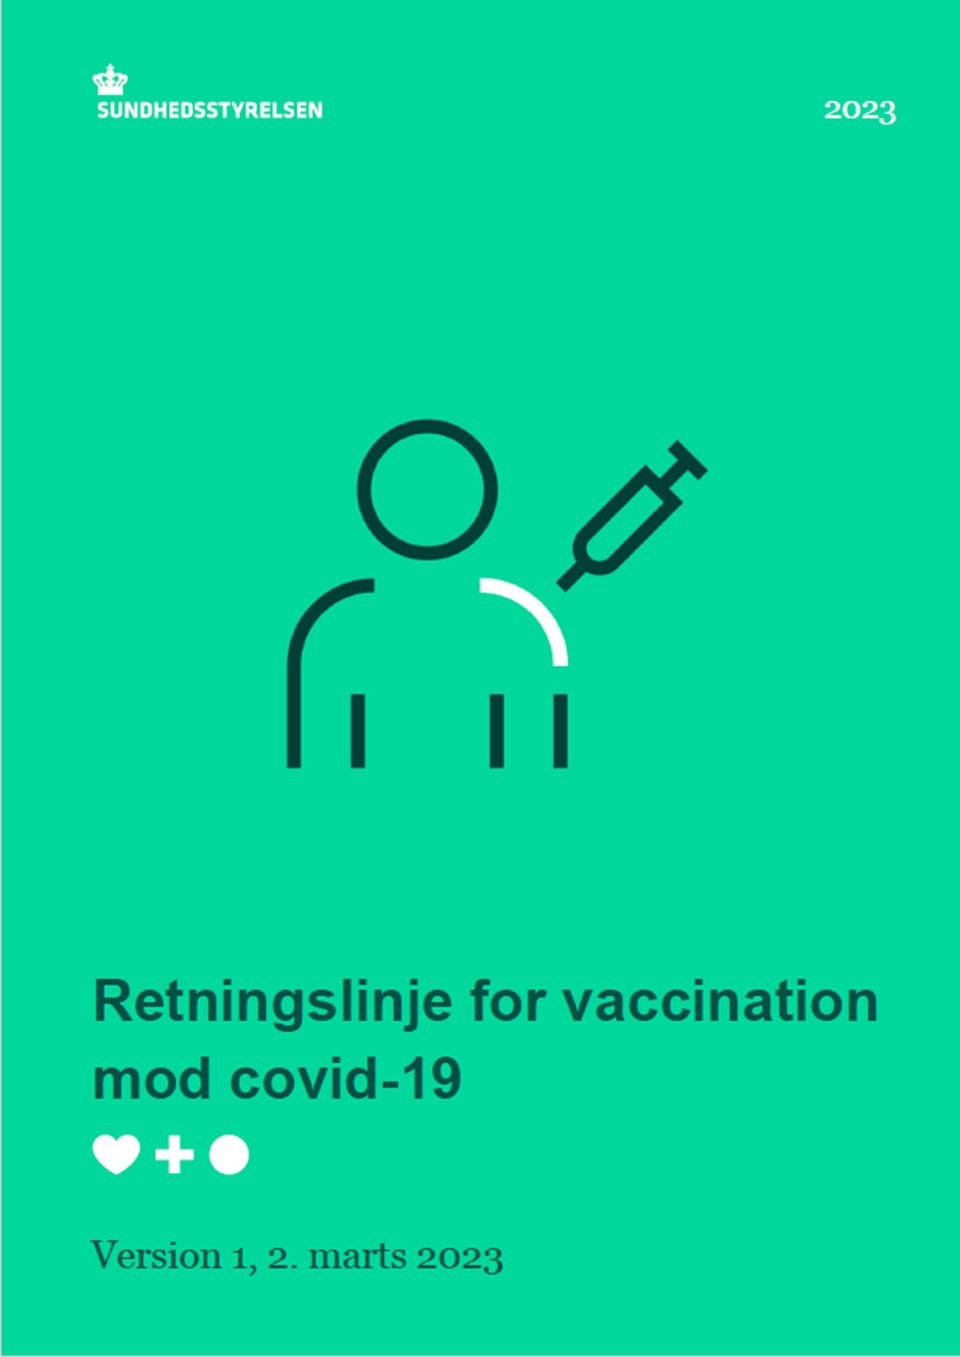 Retningslinje for vaccination mod covid-19, influenza og pneumokok&shy;sygdom